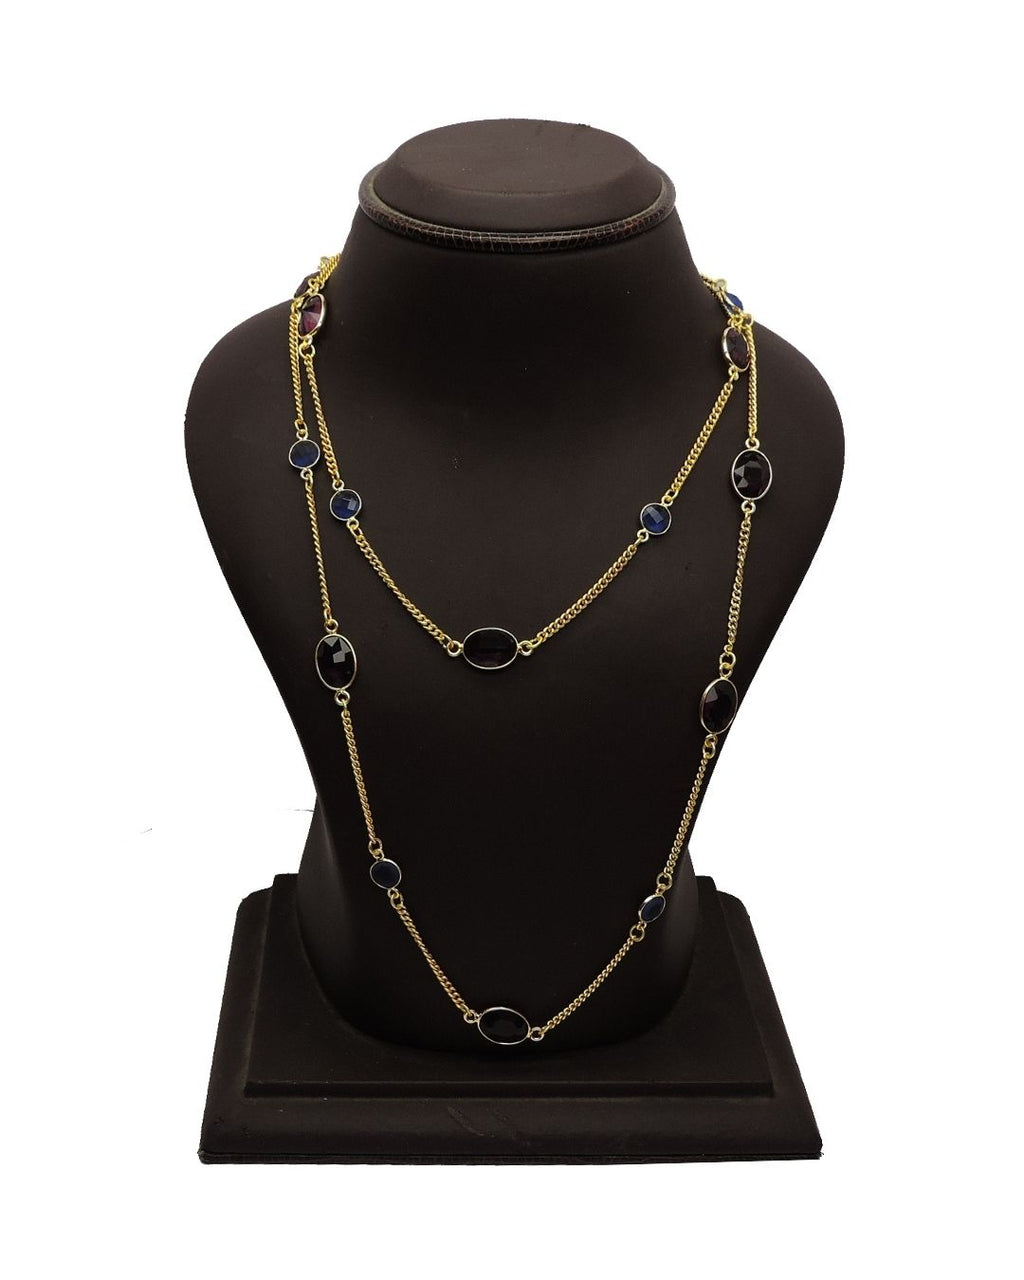 Kadita Necklace - Necklaces - Handcrafted Jewellery - Made in India - Dubai Jewellery, Fashion & Lifestyle - Dori